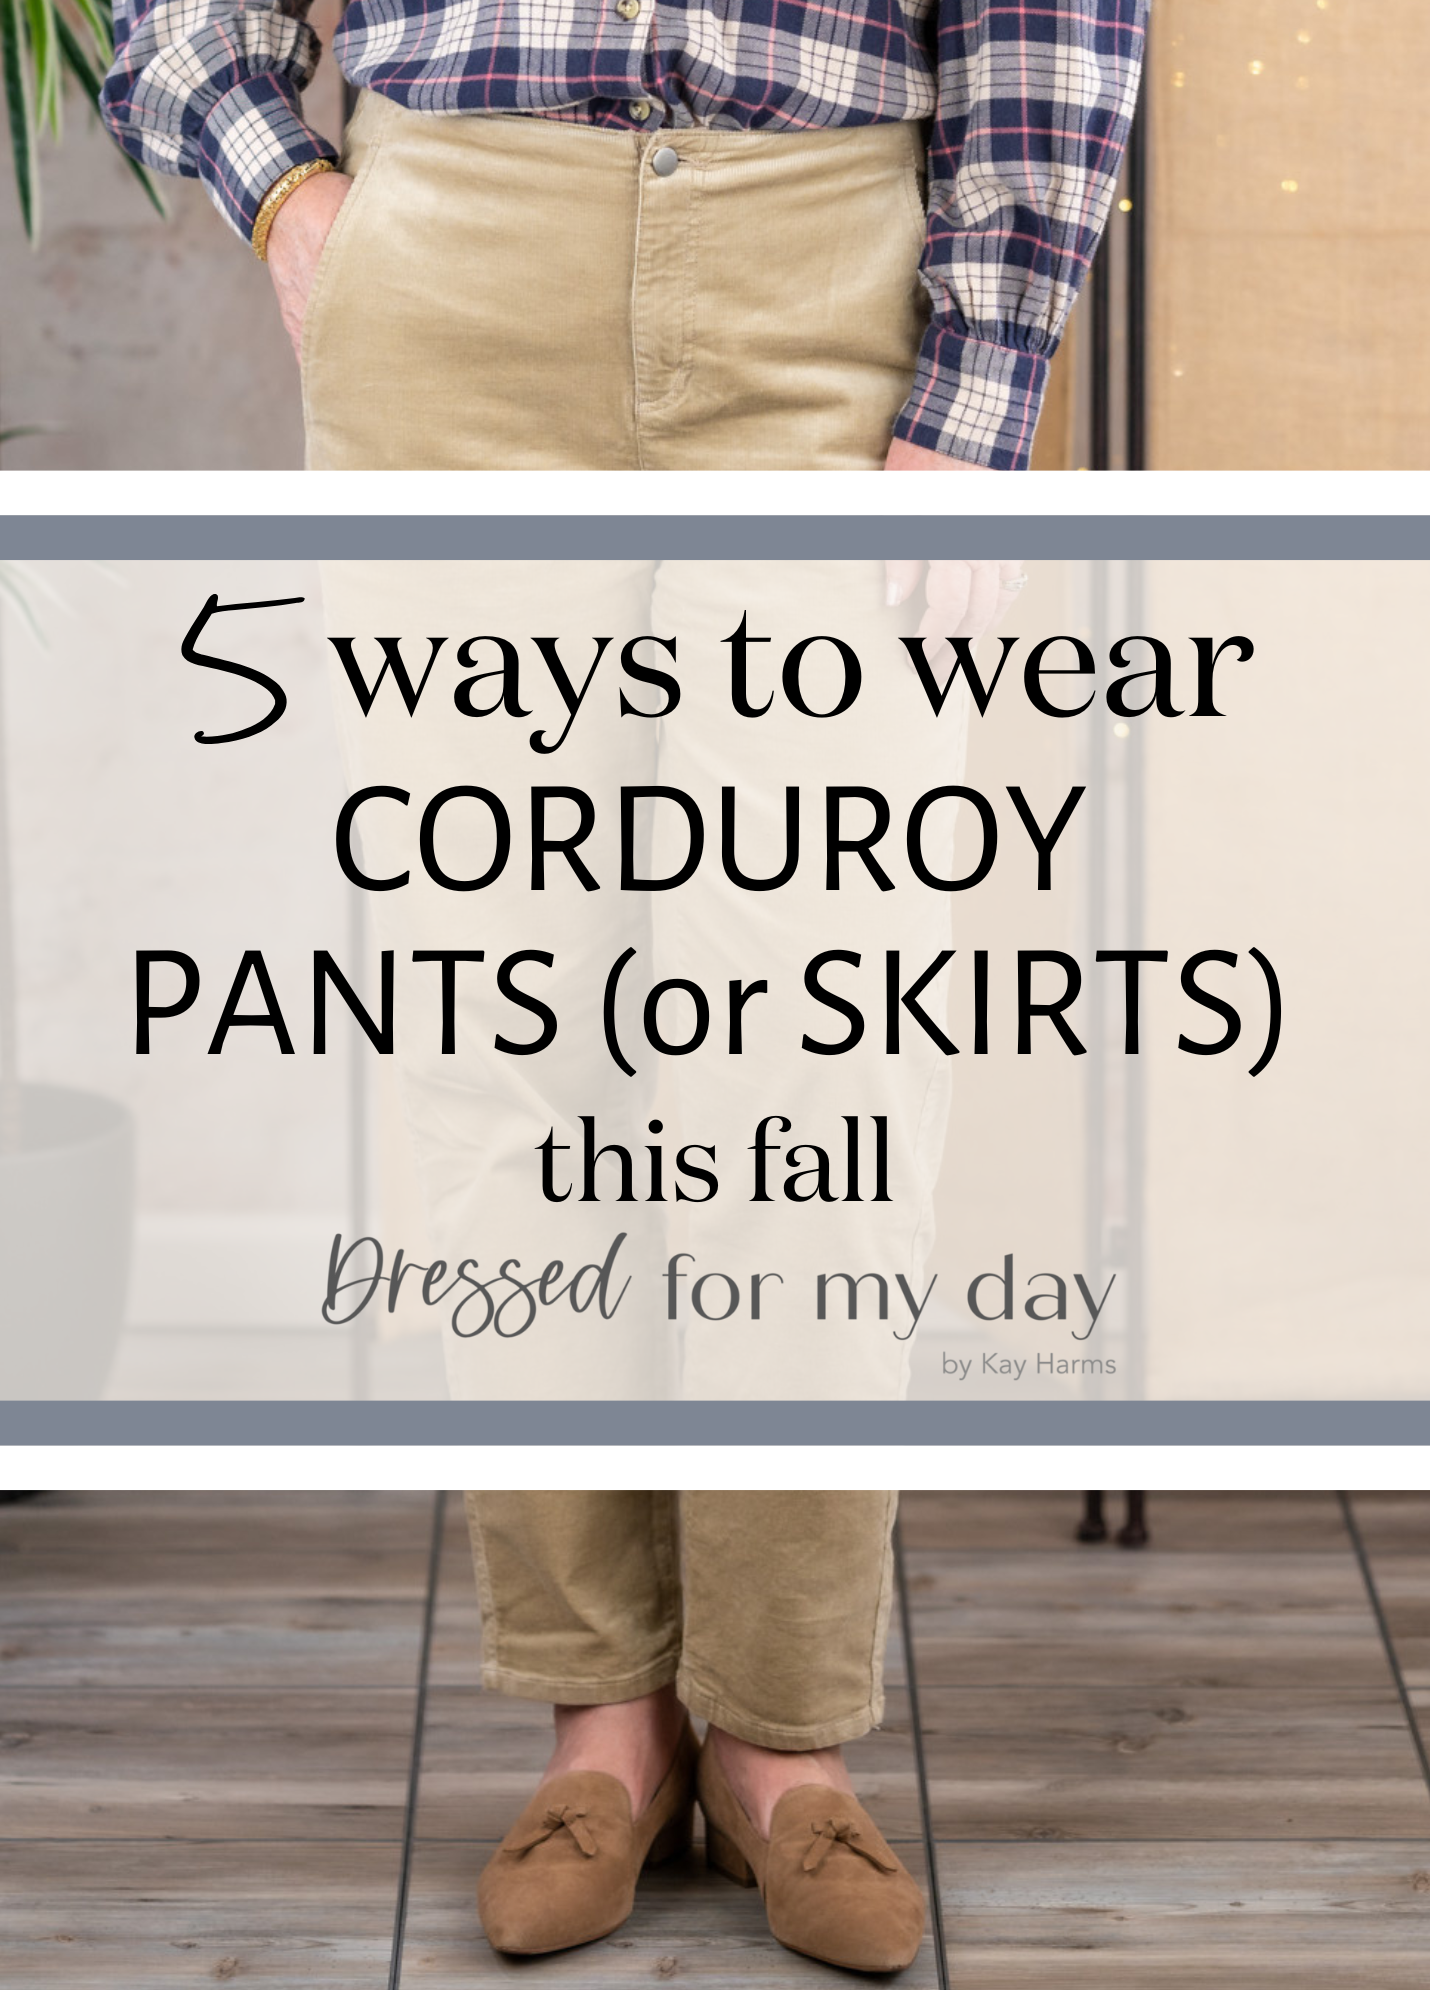 5 WAYS TO WEAR CORDUROY PANTS